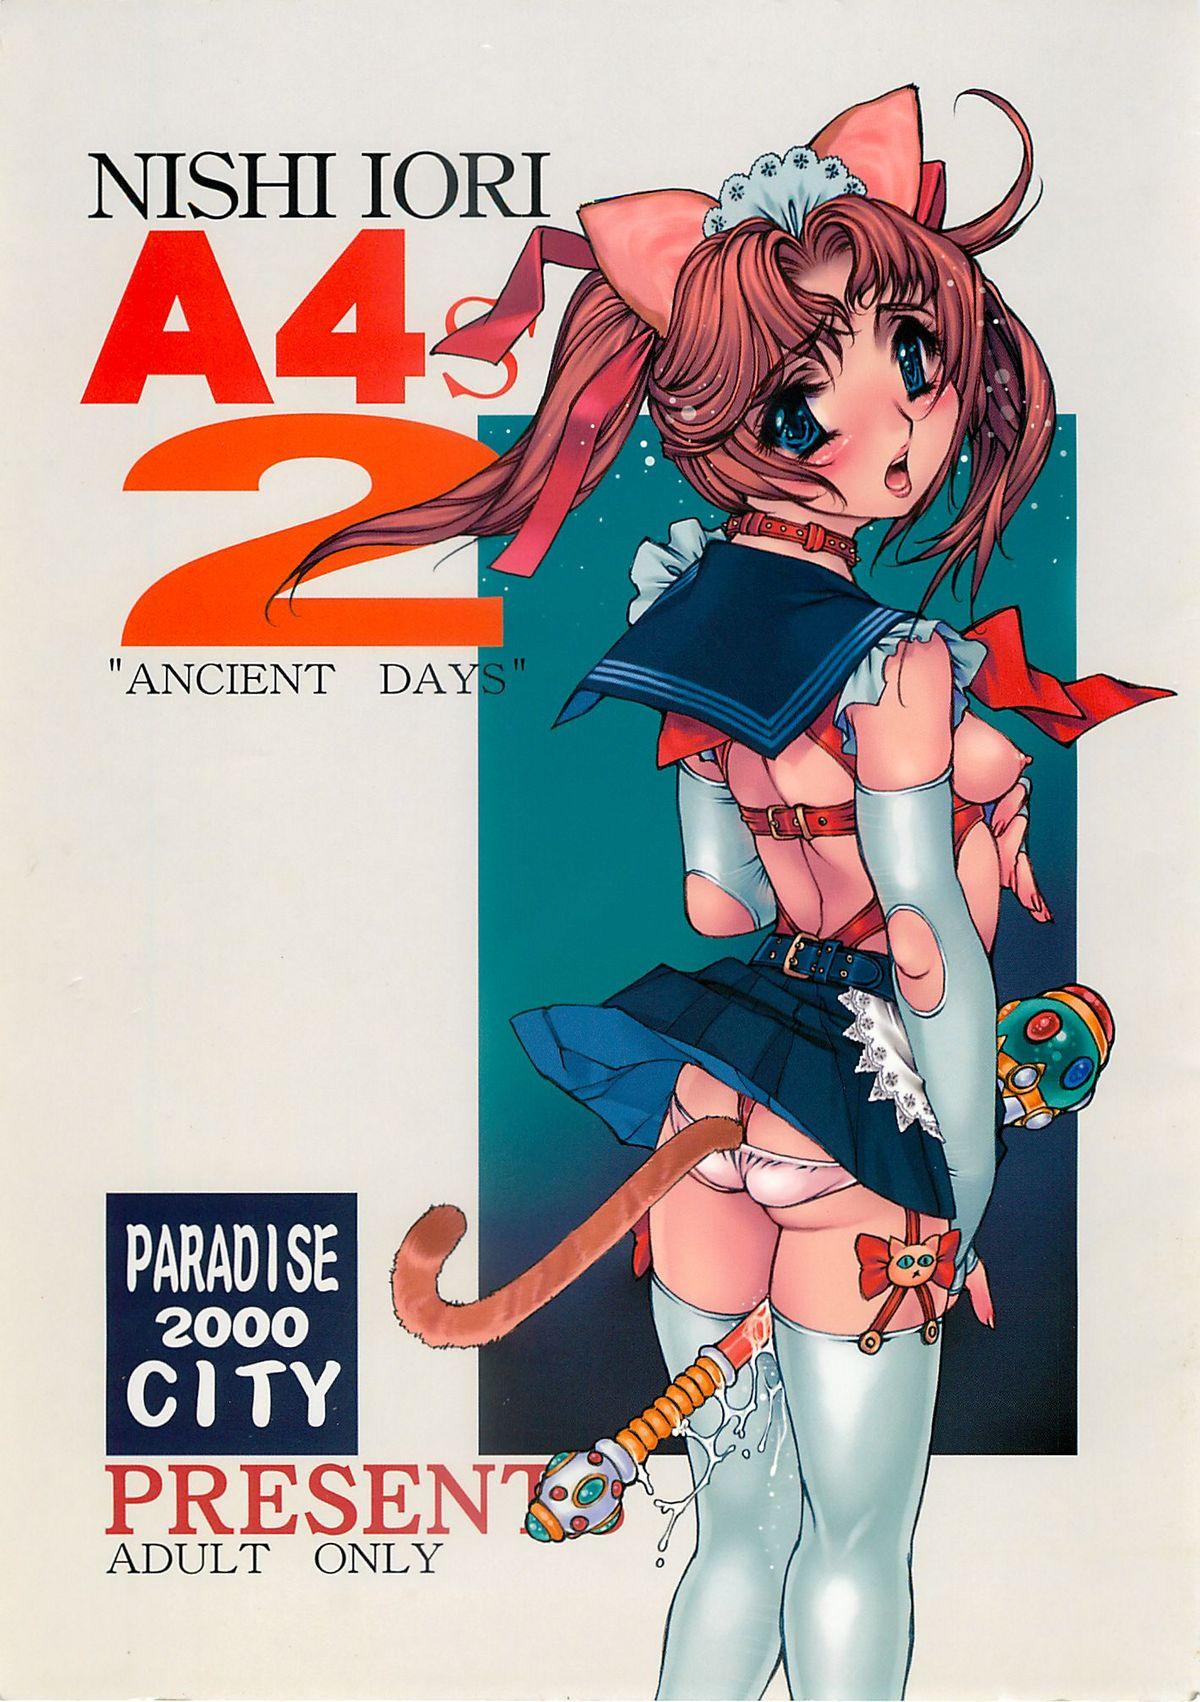 Nishi Iori A4S'2 ”Ancient Days” 0